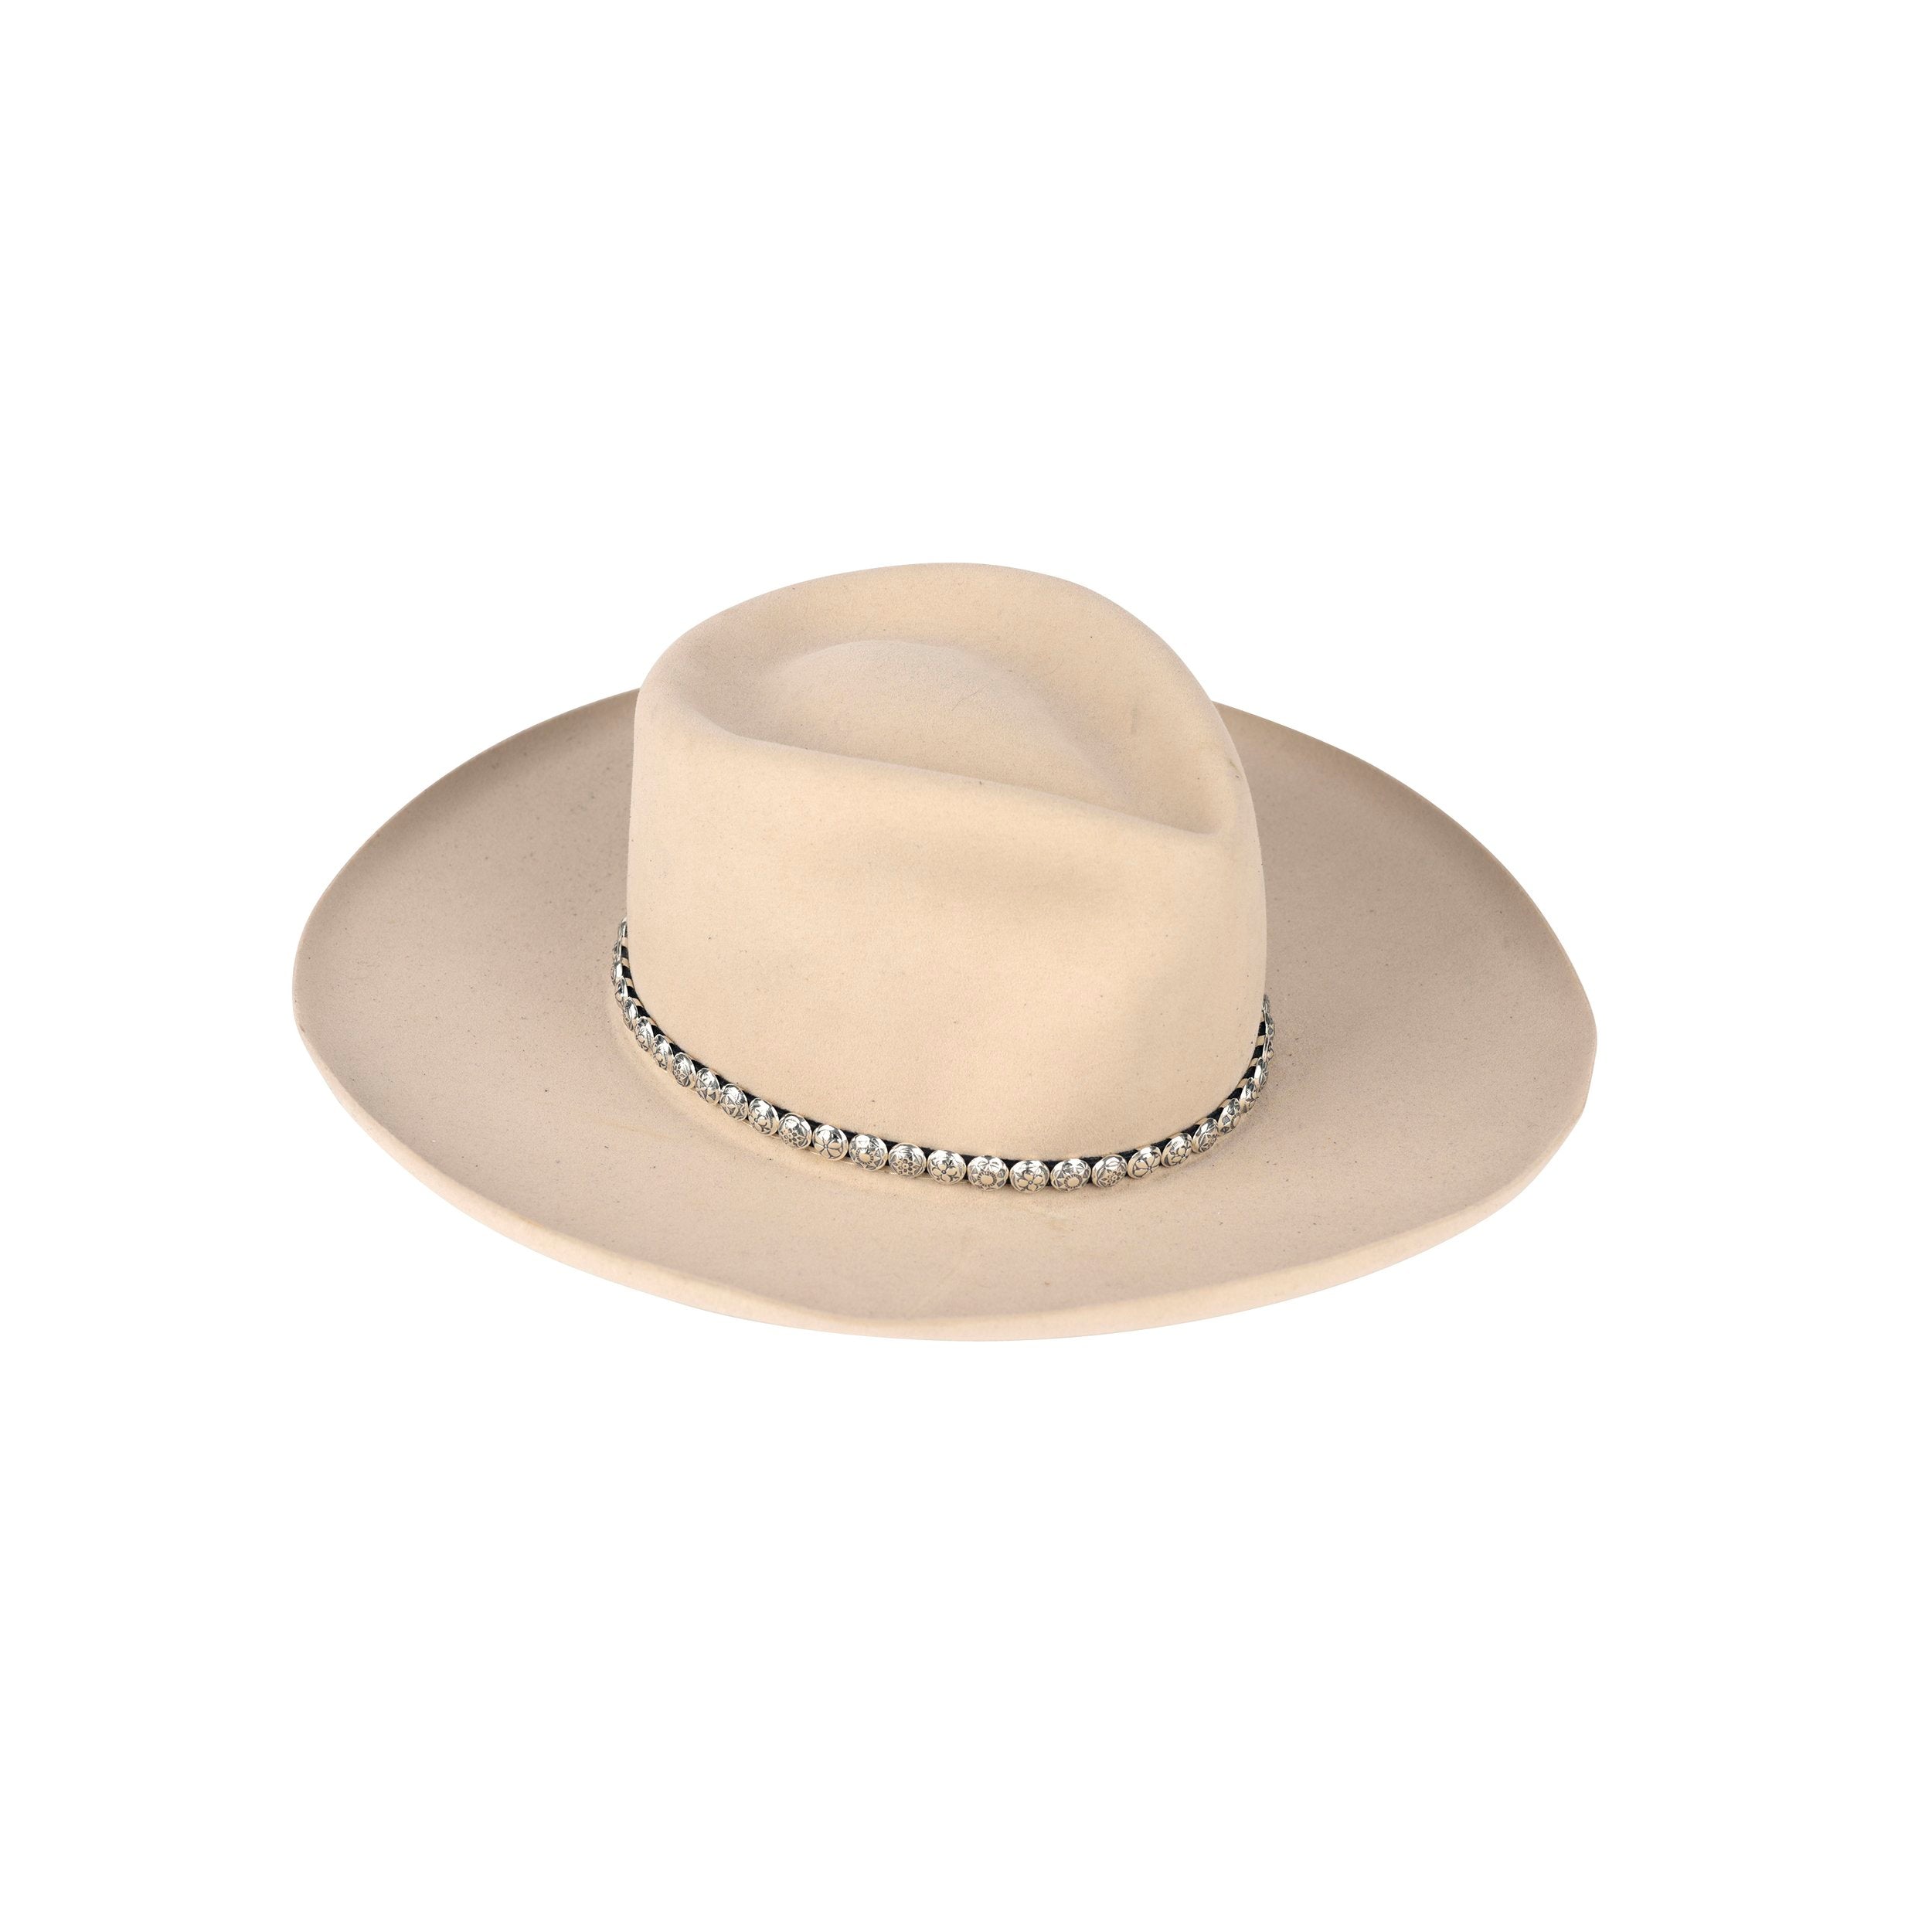 Rick Montaño Silver Stamped Hatband